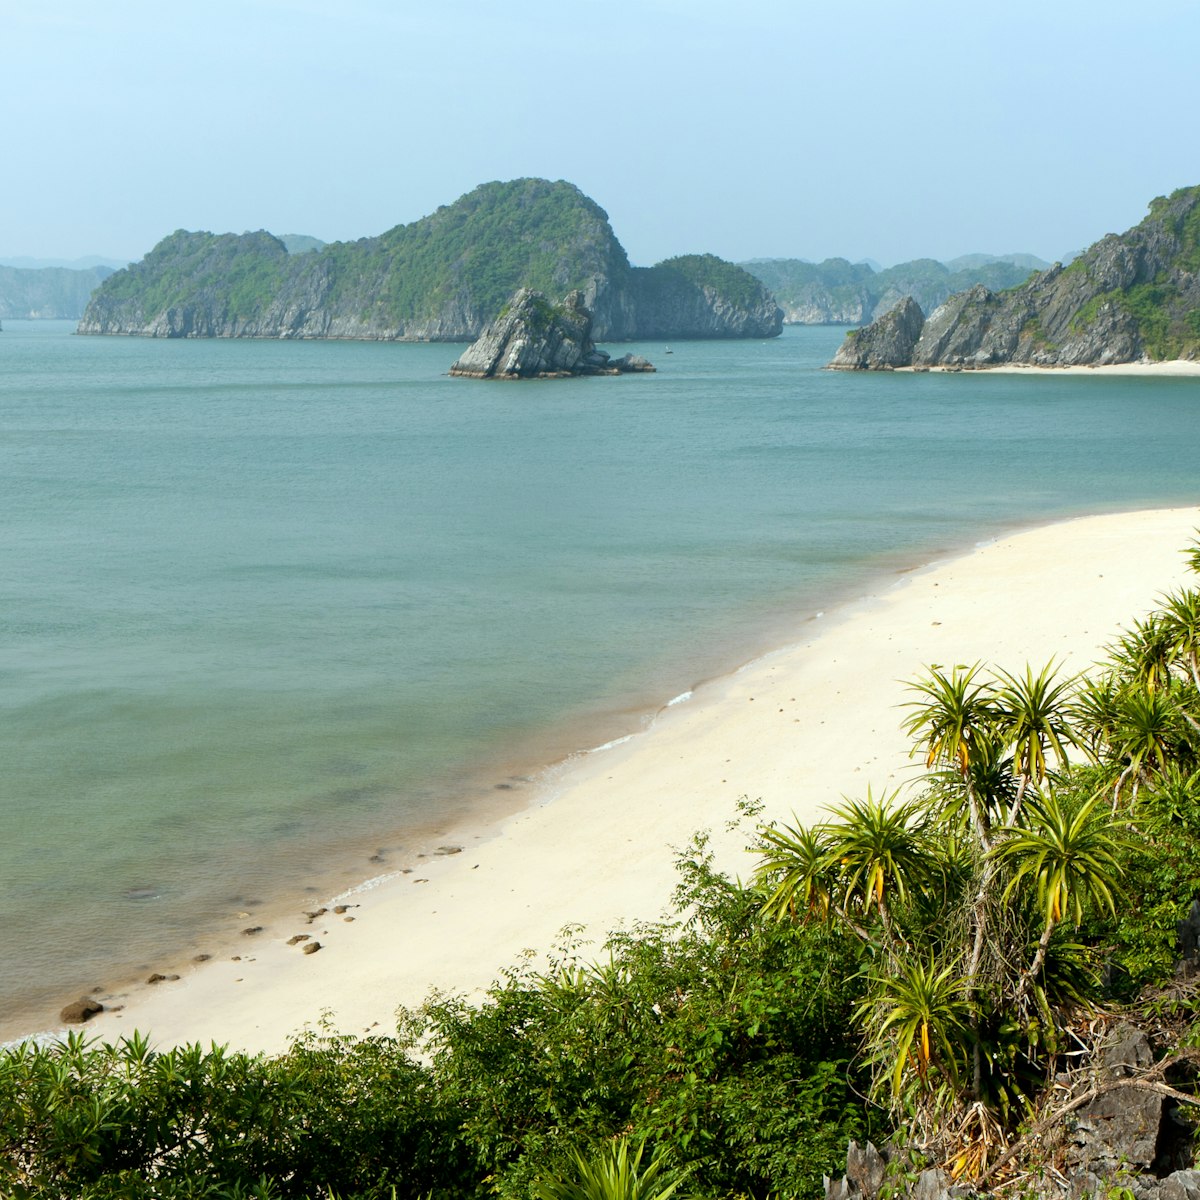 Unoccupied beach at the Lan Ha Bay in Vietnam